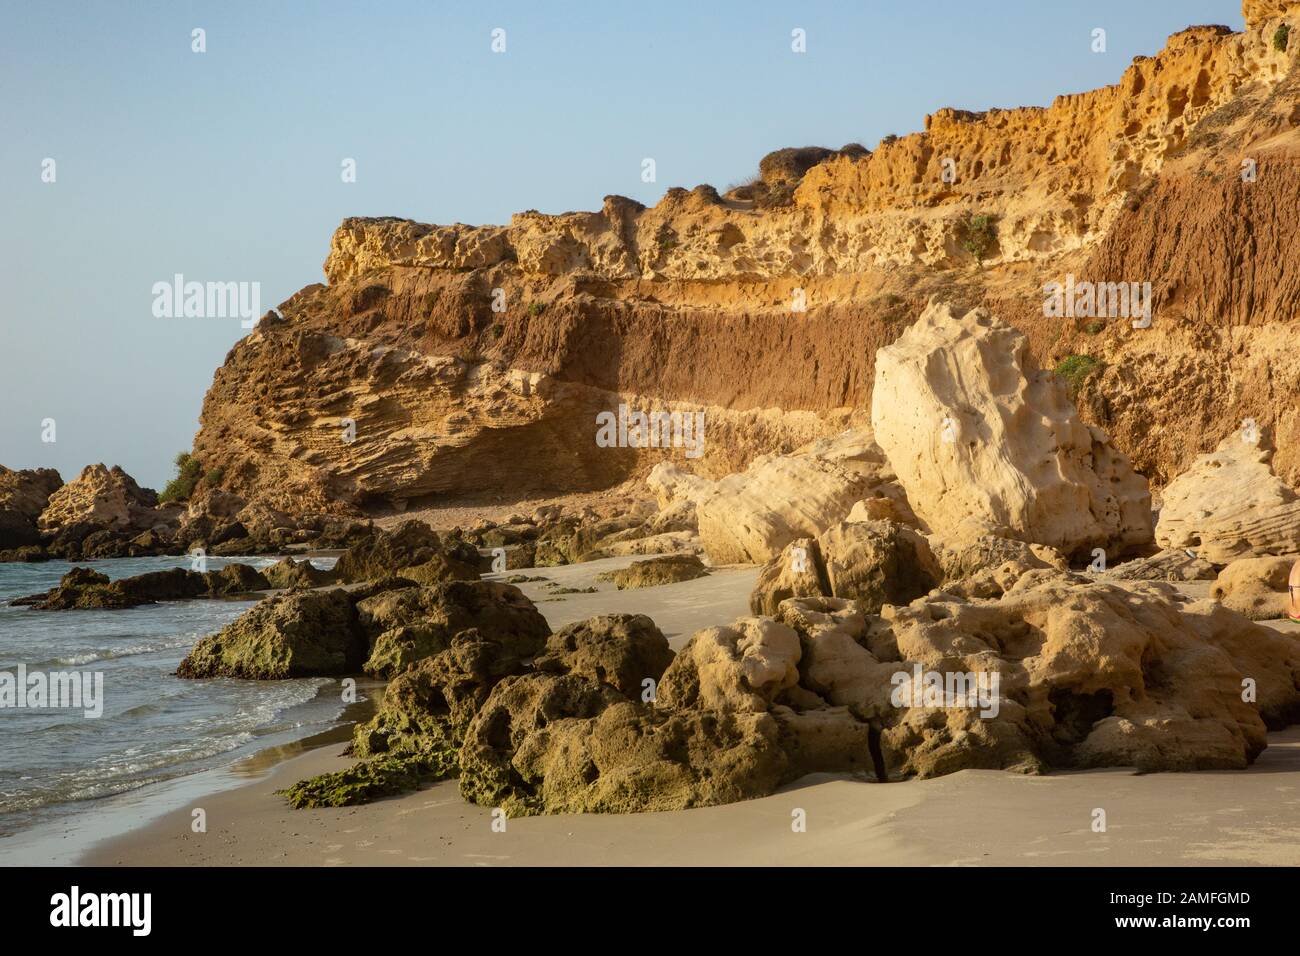 Eroded coastal cliff. Photographed on the Mediterranean coast, Israel Stock Photo